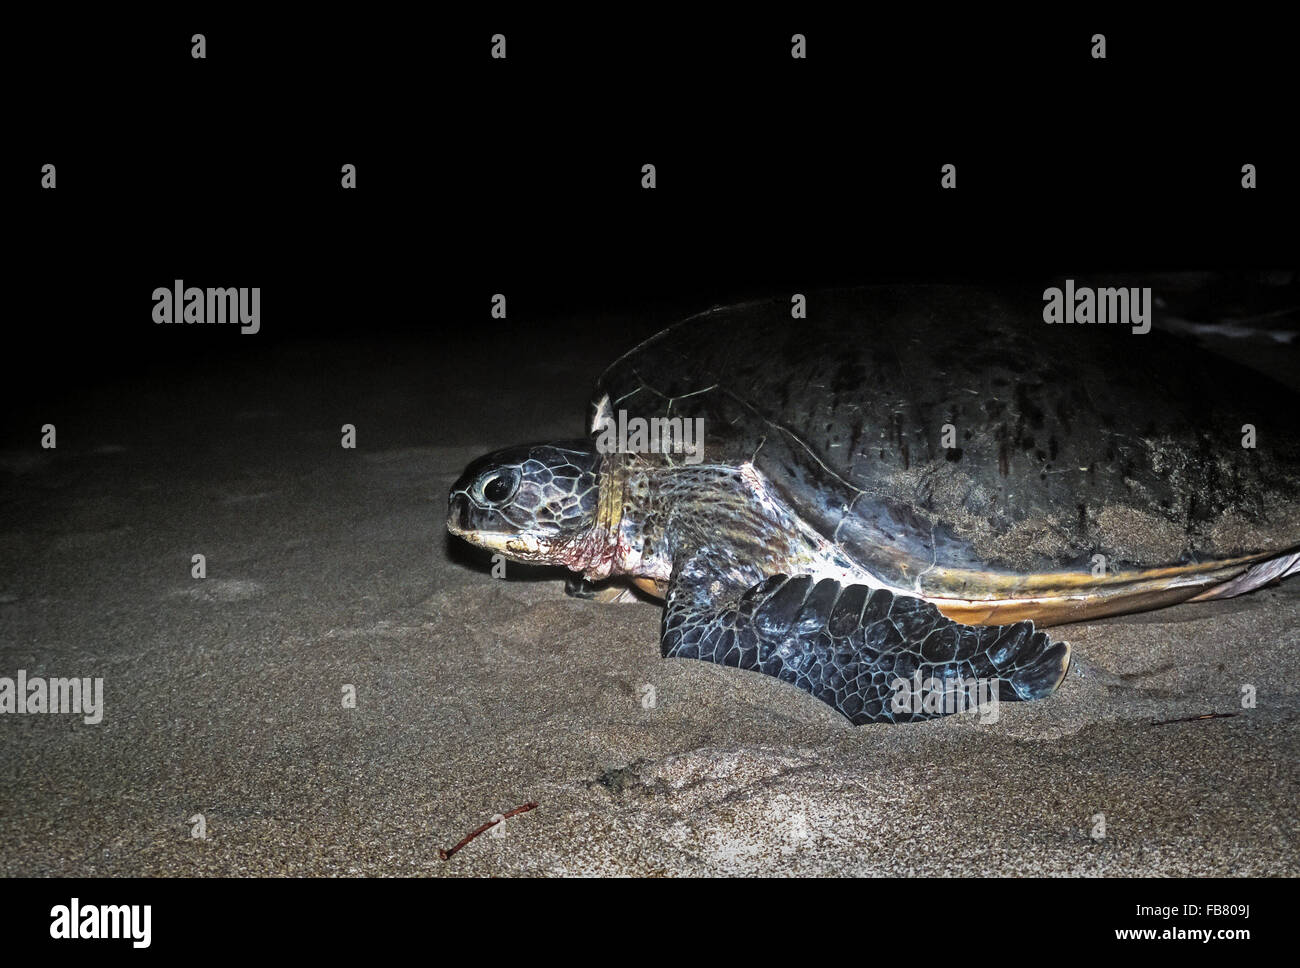 Green sea turtle (Chelonia mydas) moving to reach its spawning ground at Sukamade beach, Meru Betiri National Park, Indonesia. Stock Photo